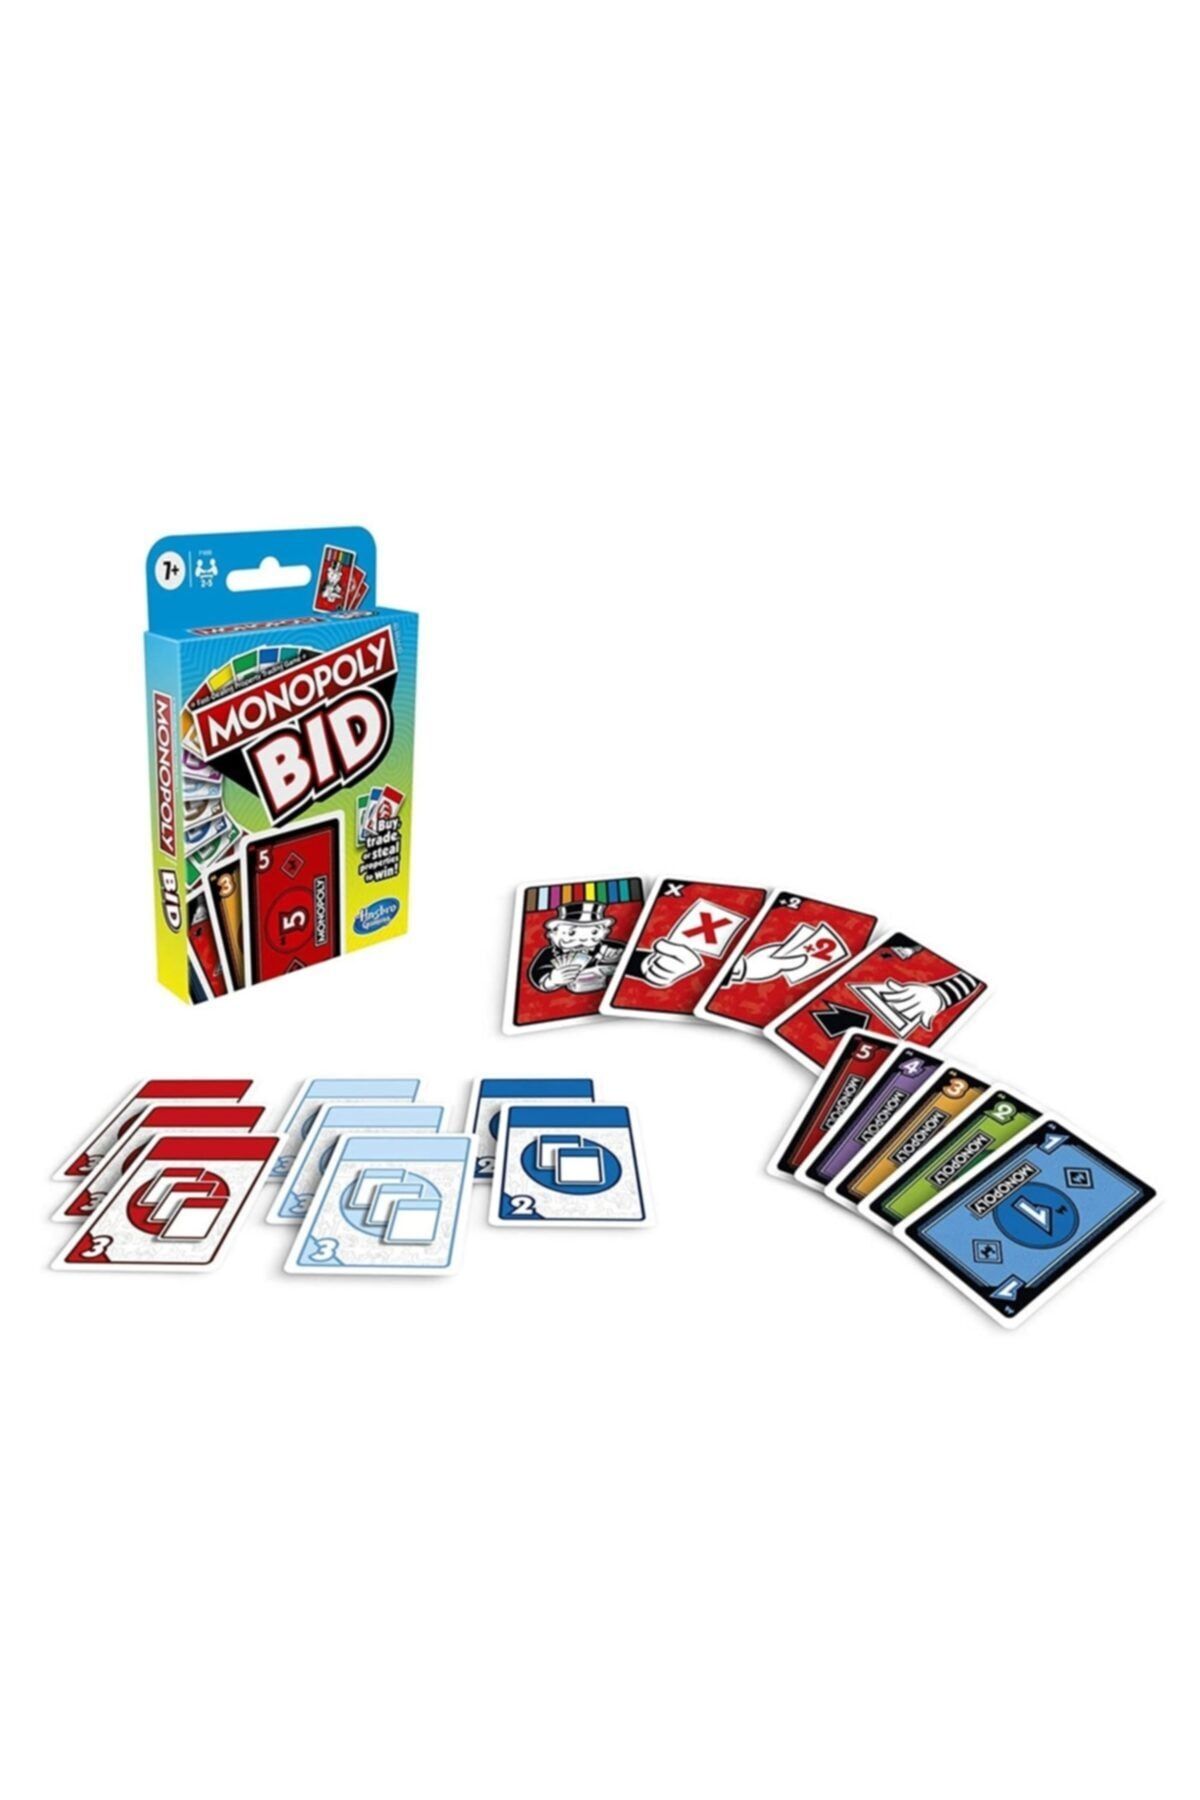 Monopoly Hasbro Bid F1699